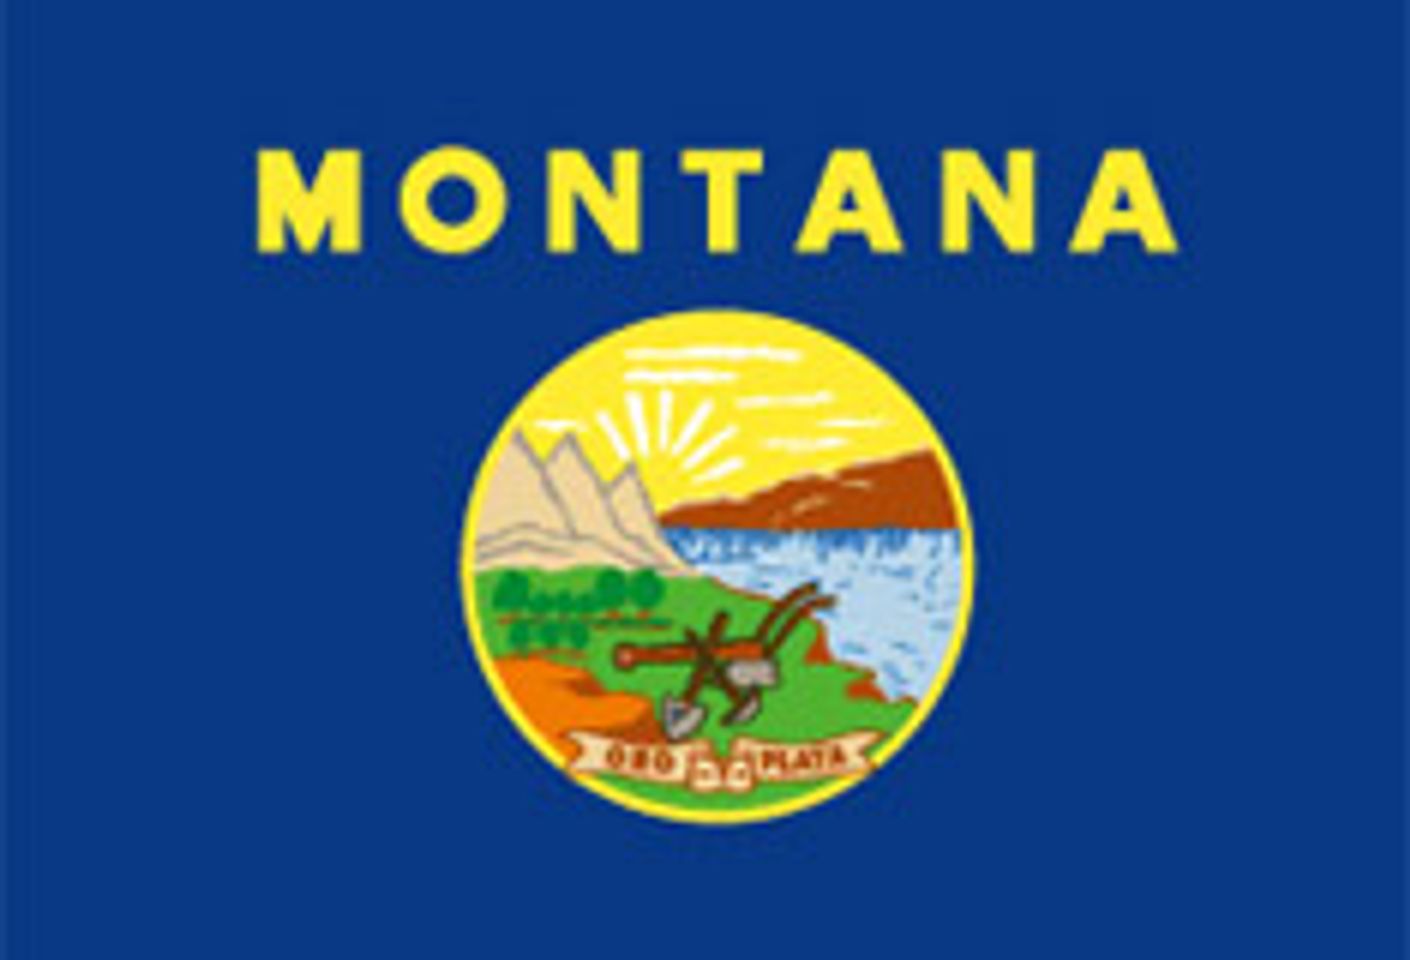 Montana County Considers Adult Ordinances